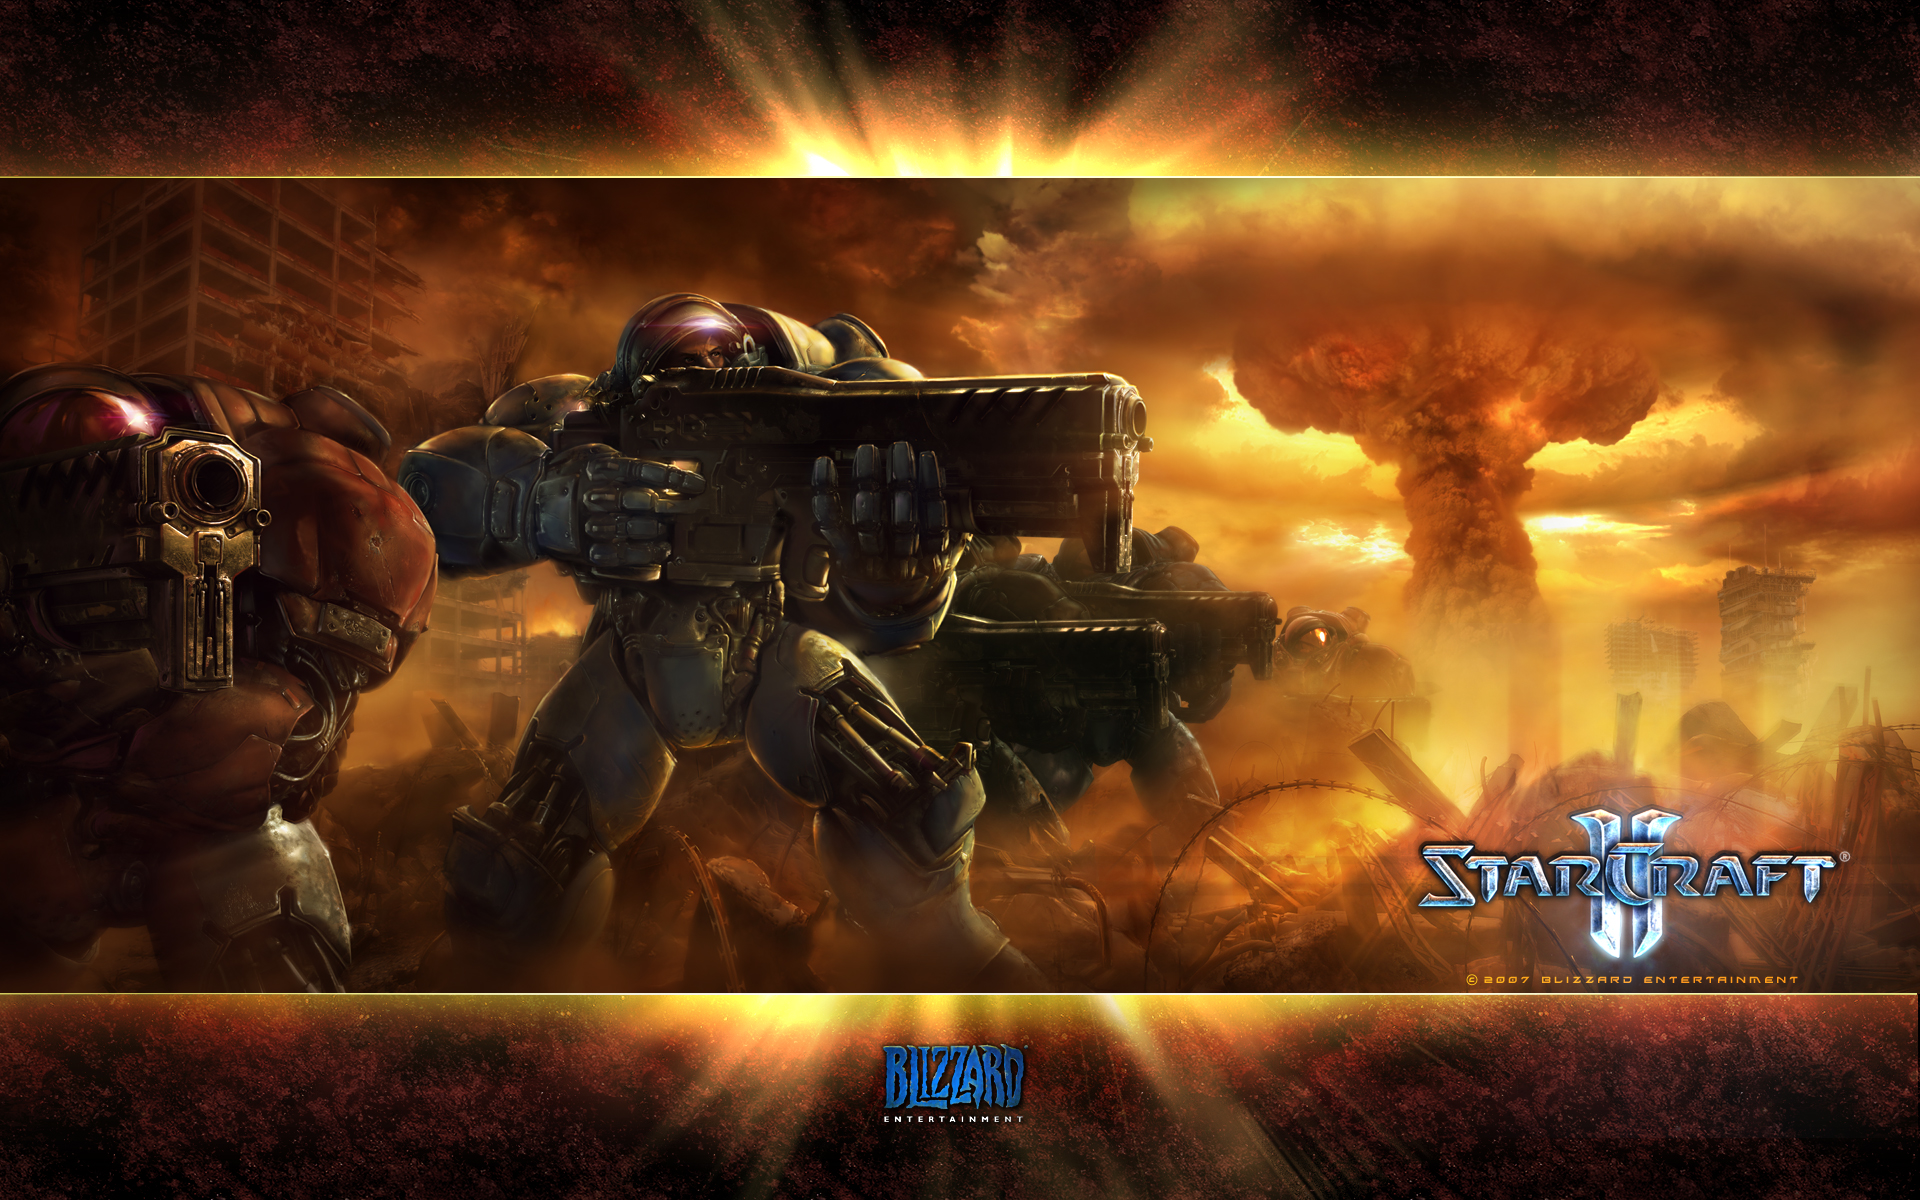 Download full size StarCraft 2 wallpaper / Games / 1920x1200